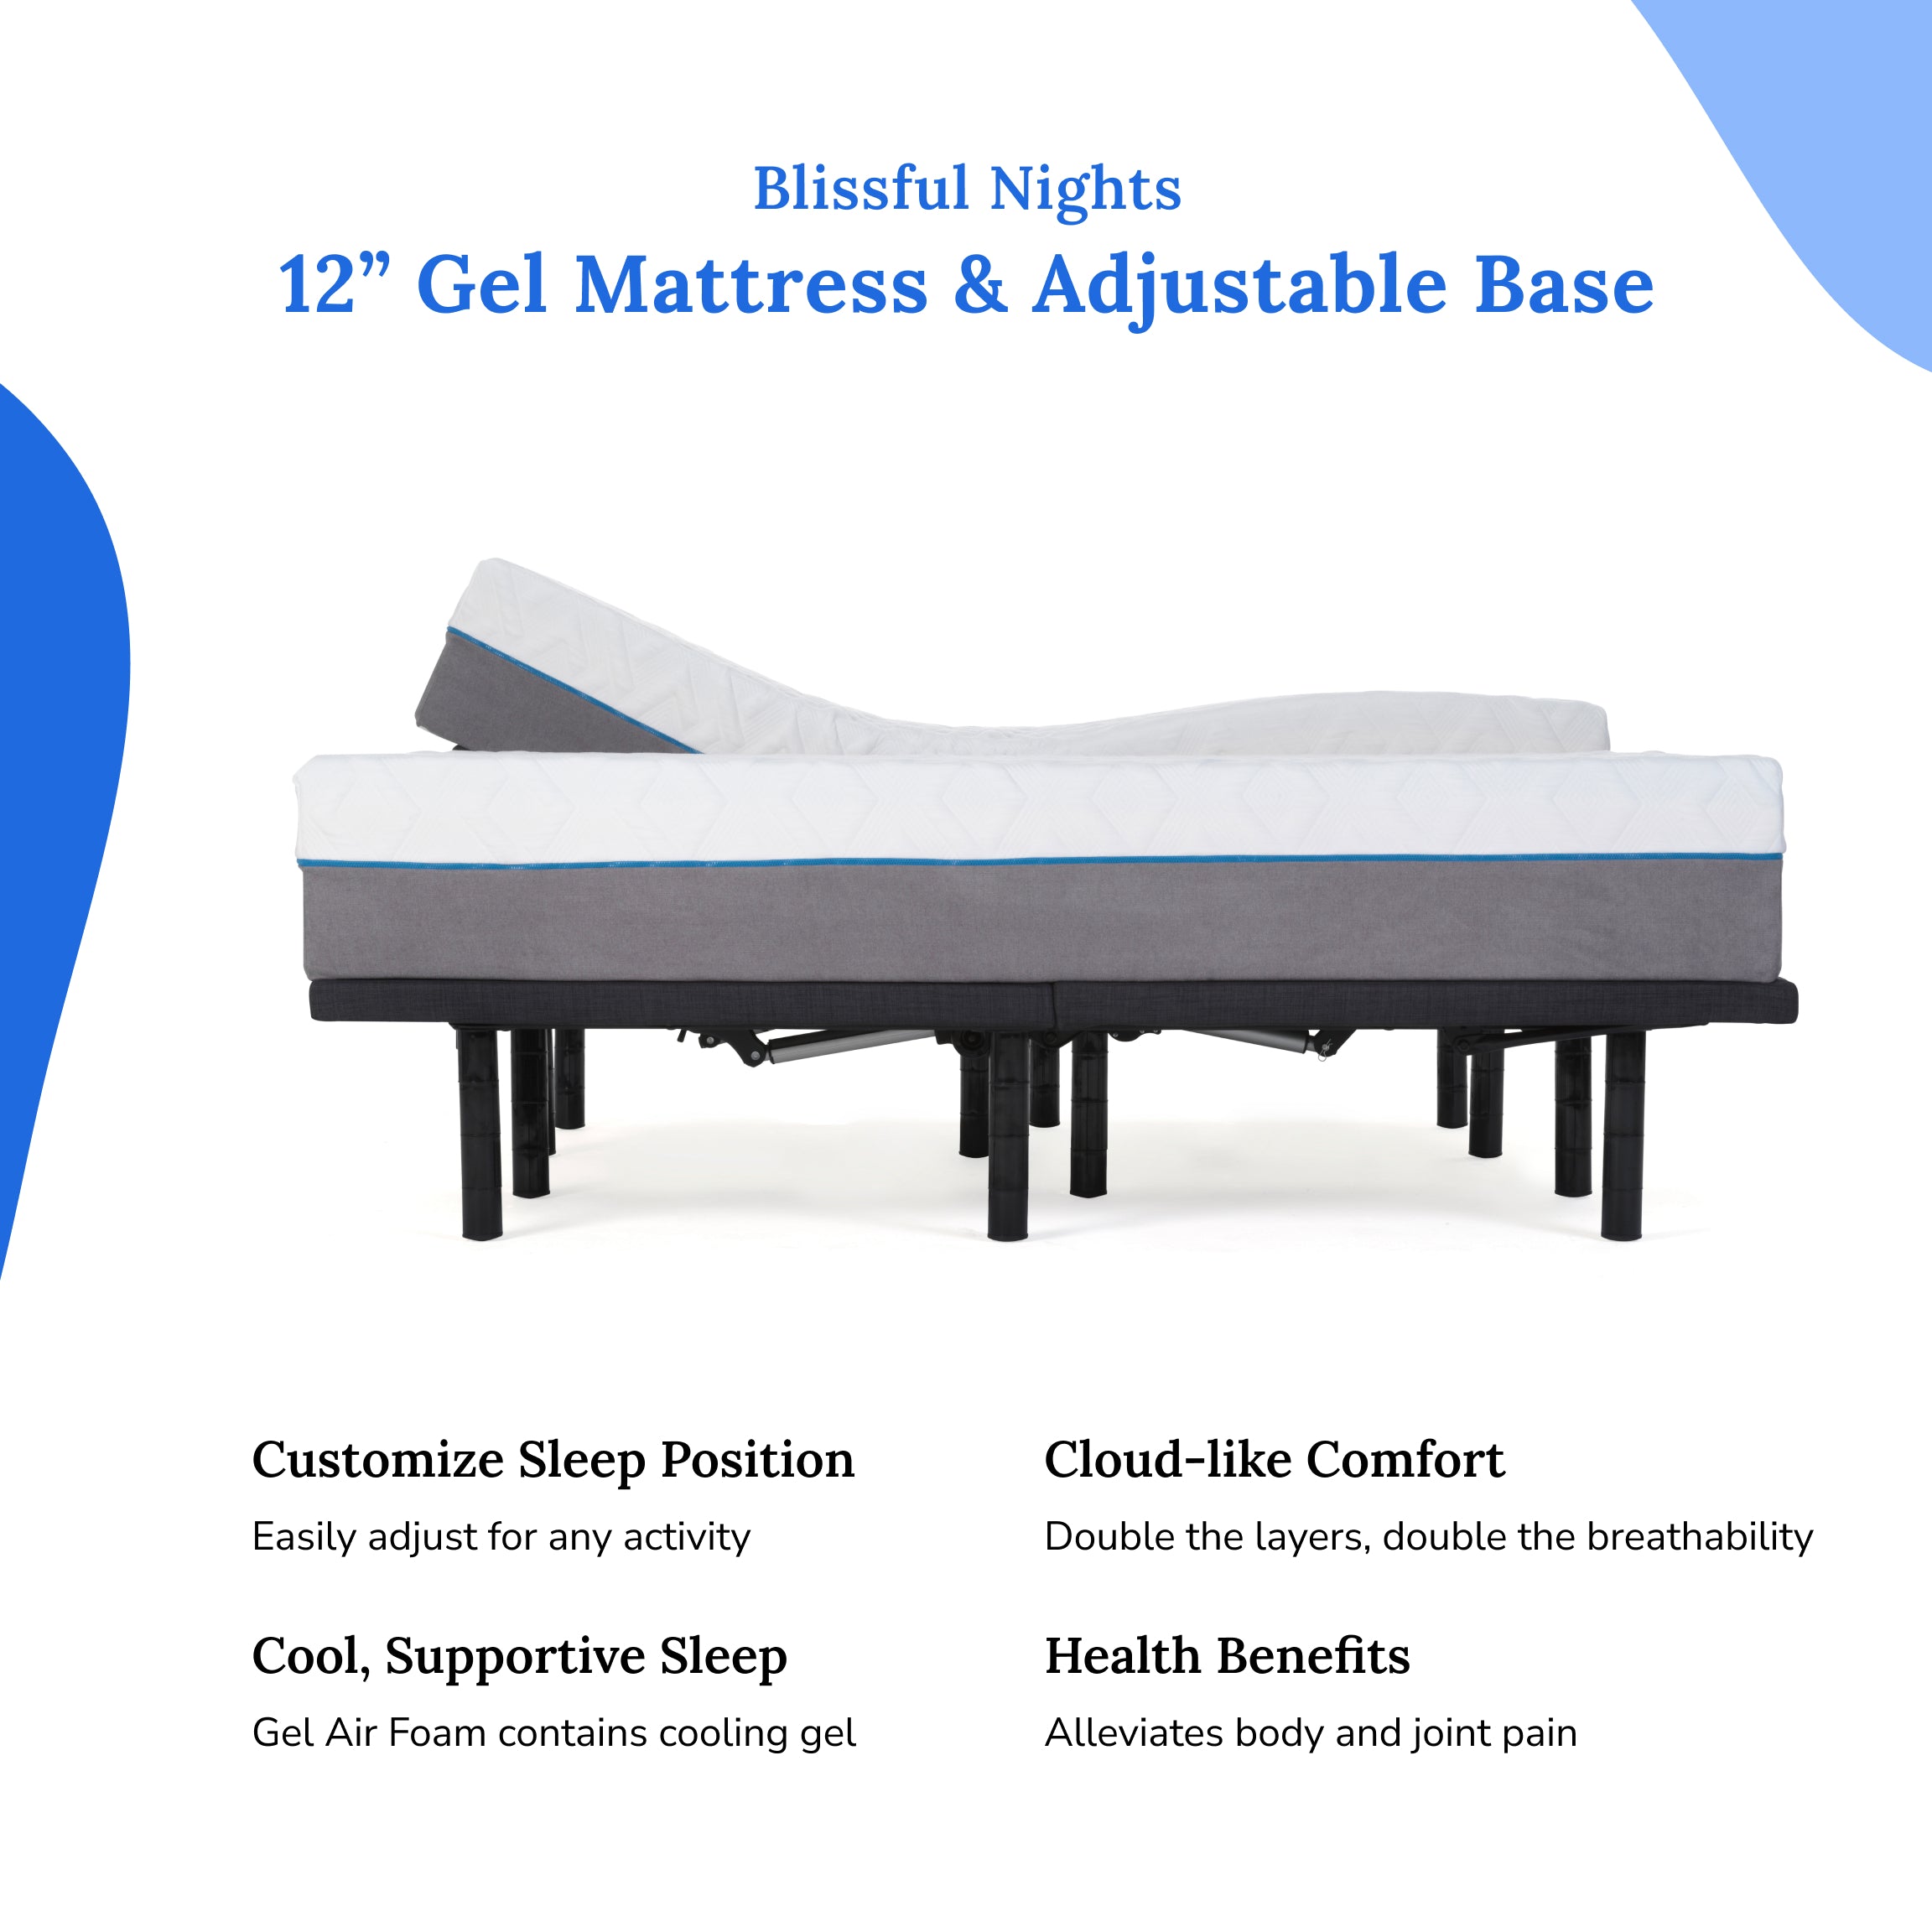 Blissful Nights Sleep System: 12” Premium Cool Gel Infused Memory Foam Mattress, Plush with e4 Premium Adjustable Base - BlissfulNights.com